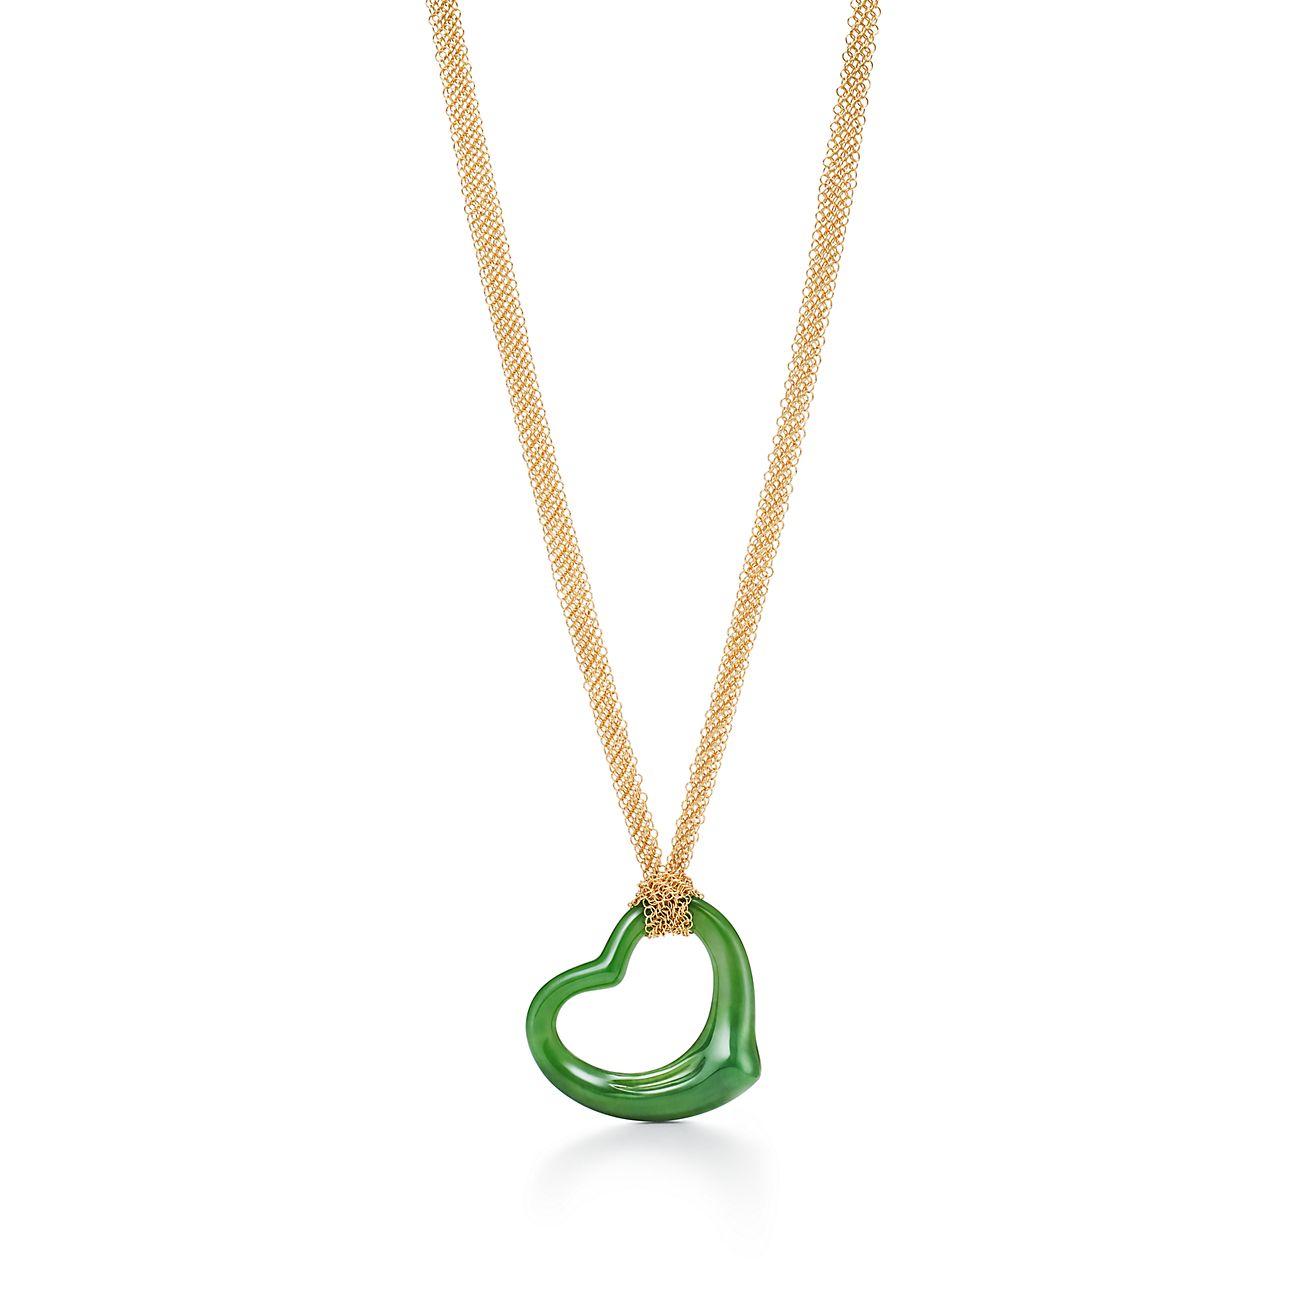 jade necklace tiffany